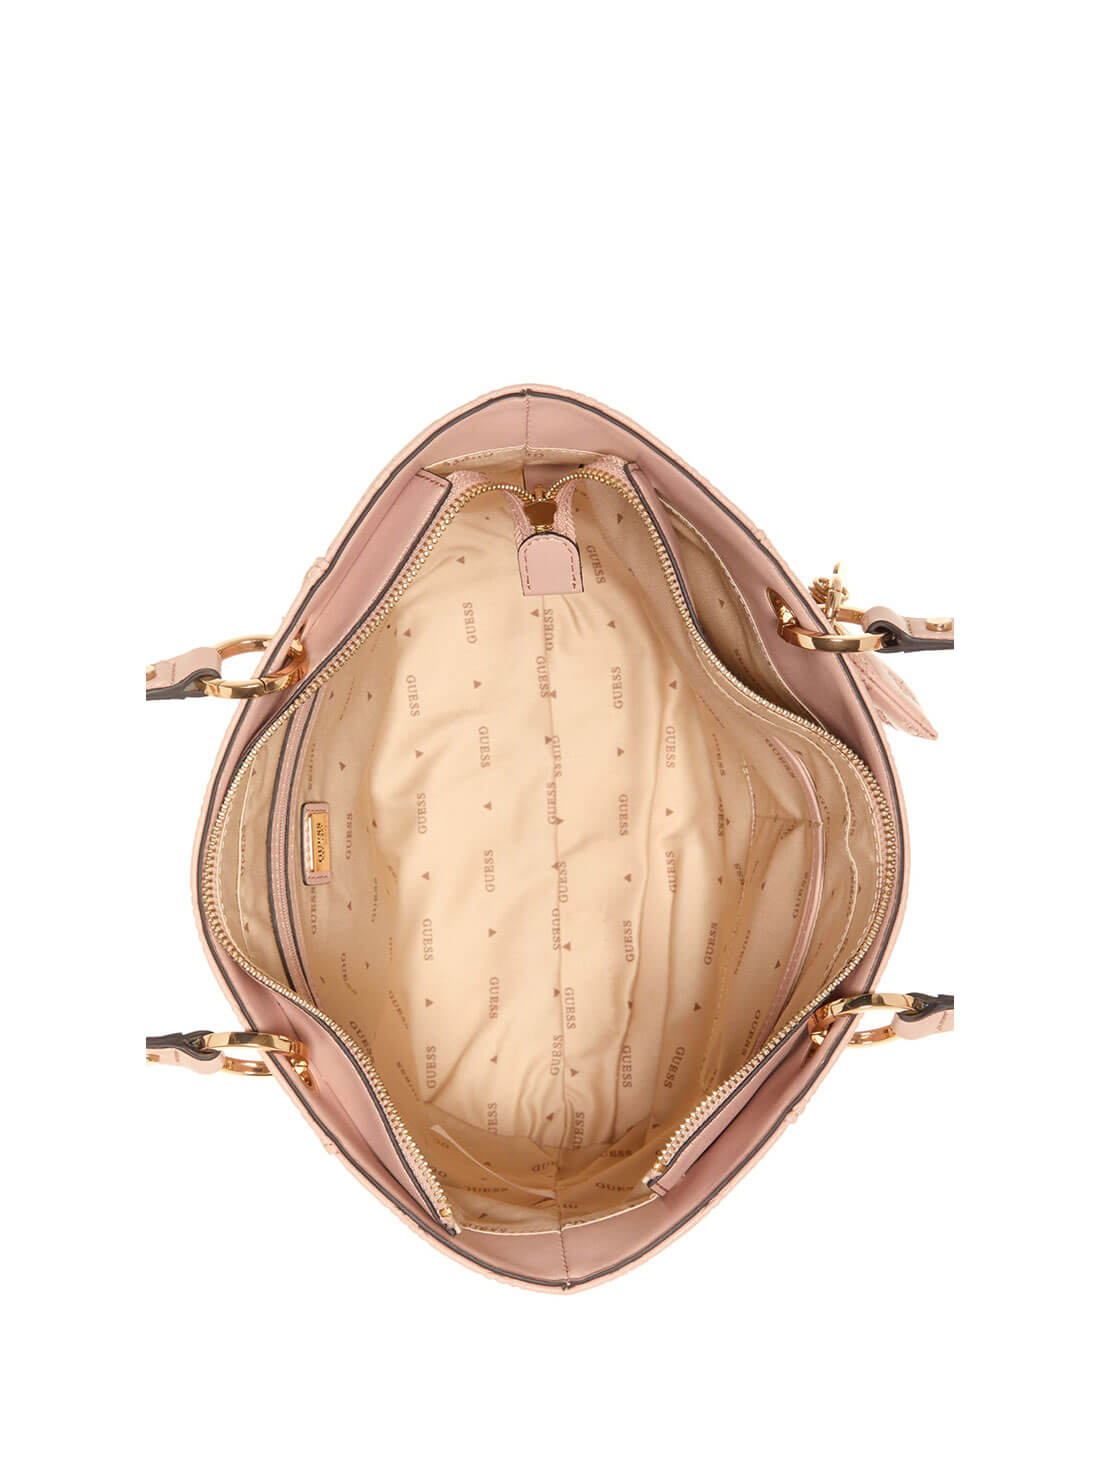 Light Pink Noelle La Femme Small Tote Bag | GUESS Women's Handbags | inside view